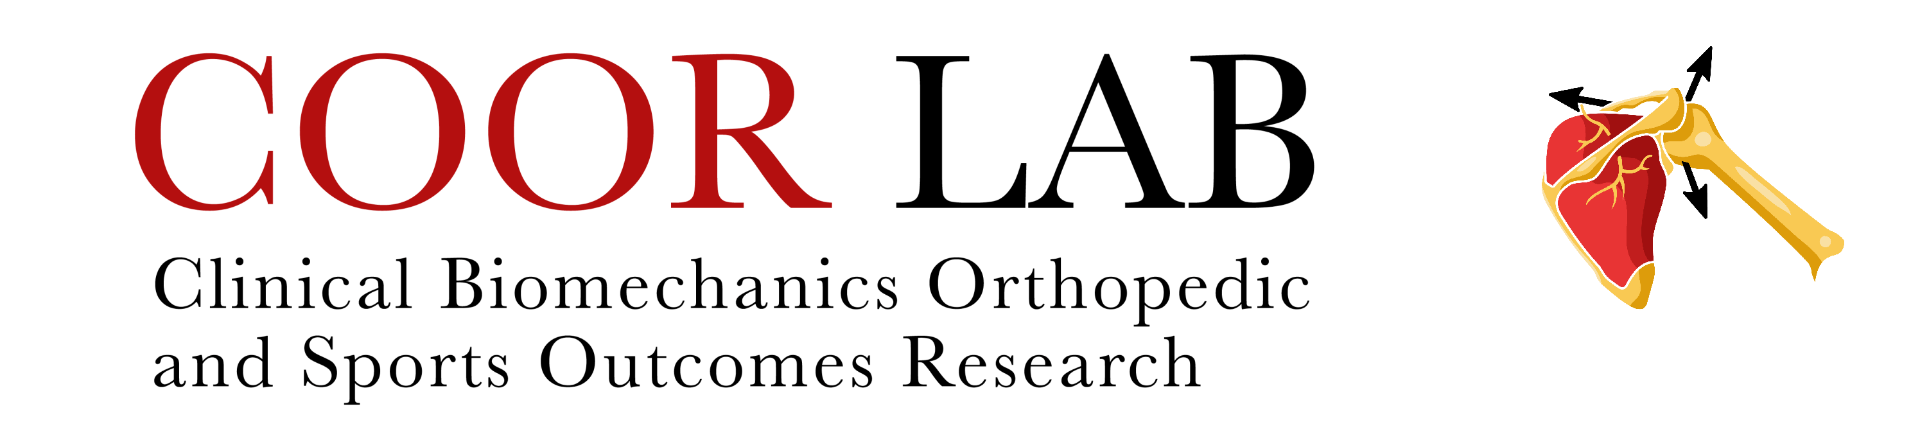 Clinical Biomechanics Orthopedic and Sports Outcomes Research logo